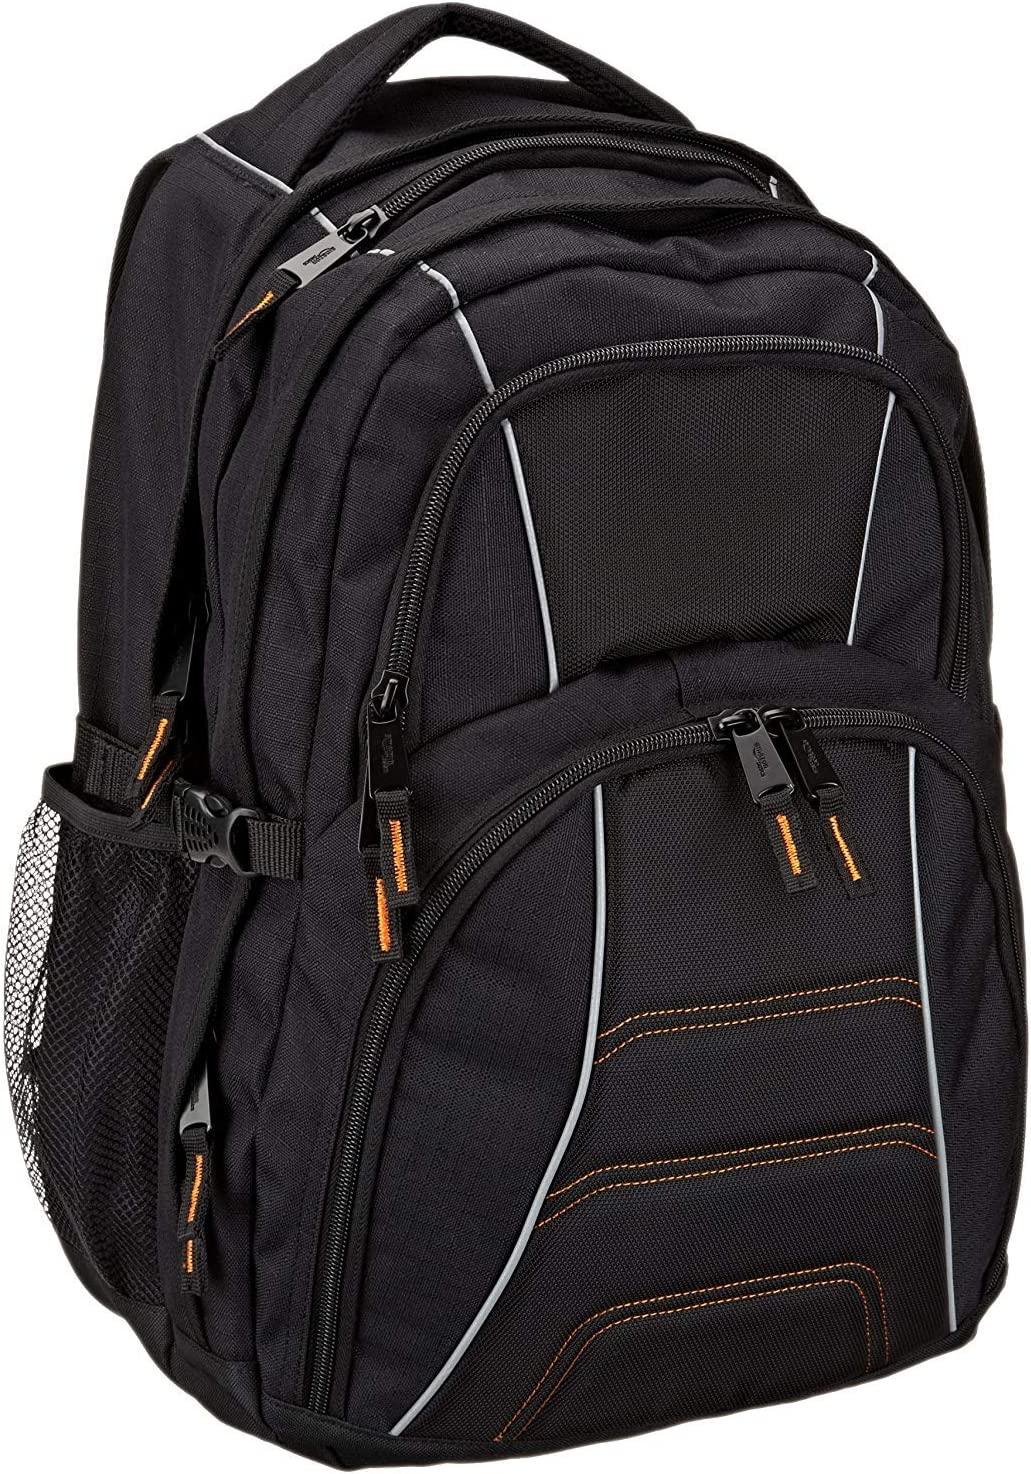 Amazon Basics Laptop Backpack Fits Up to 17-Inch [...]